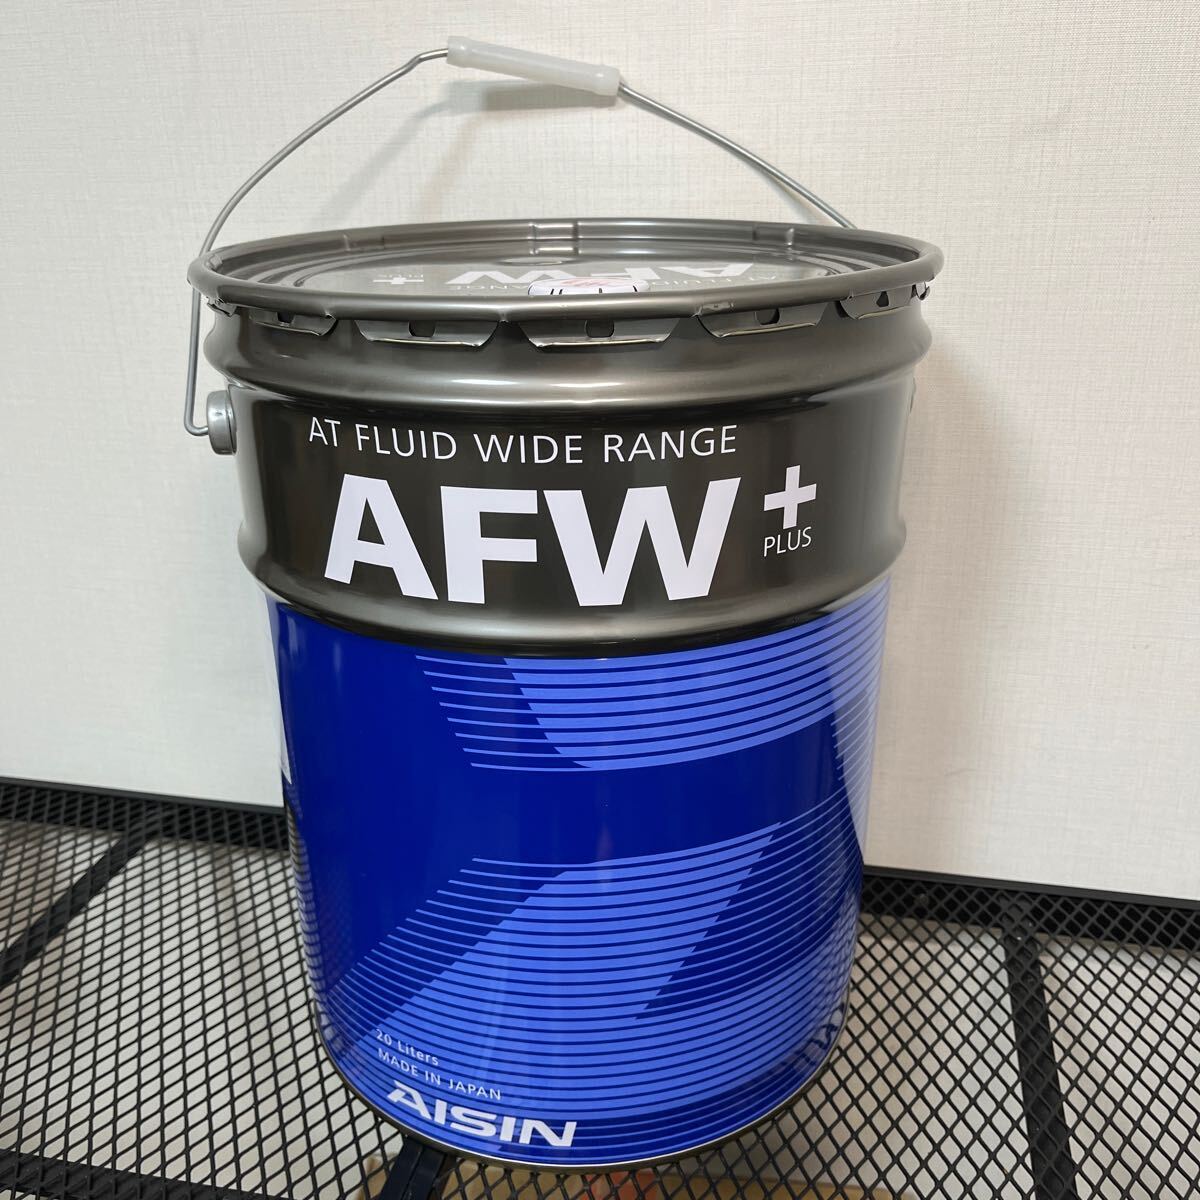 AISIN アイシン AFW+ plus 20L 残り約半分弱 ATF ワイドレンジの画像1